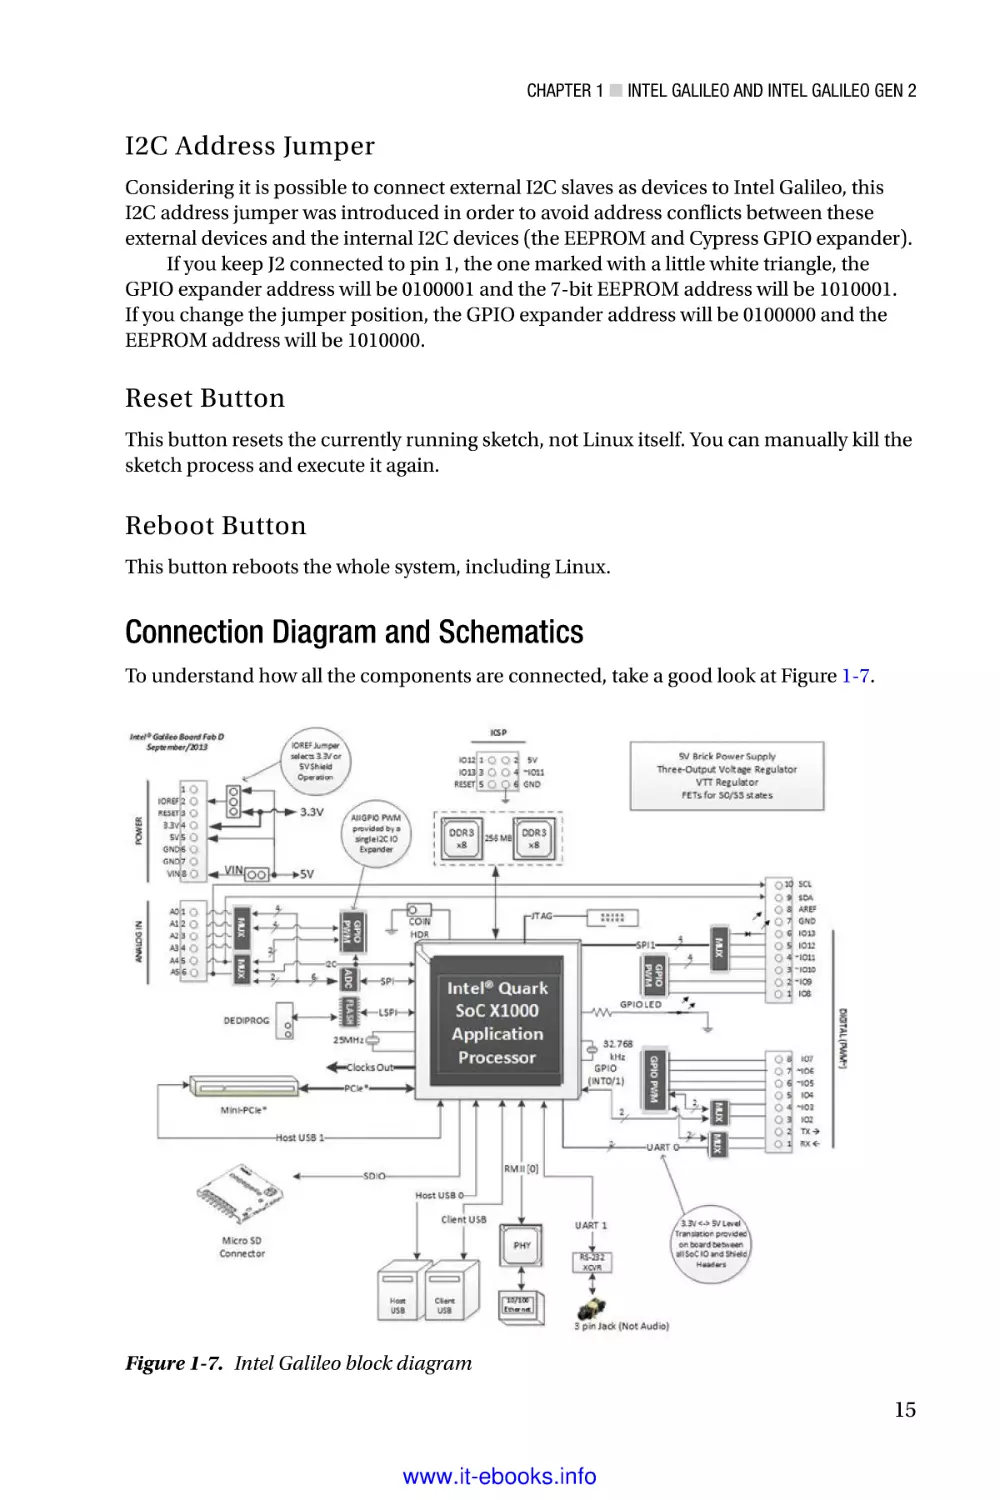 I2C Address Jumper
Reset Button
Reboot Button
Connection Diagram and Schematics